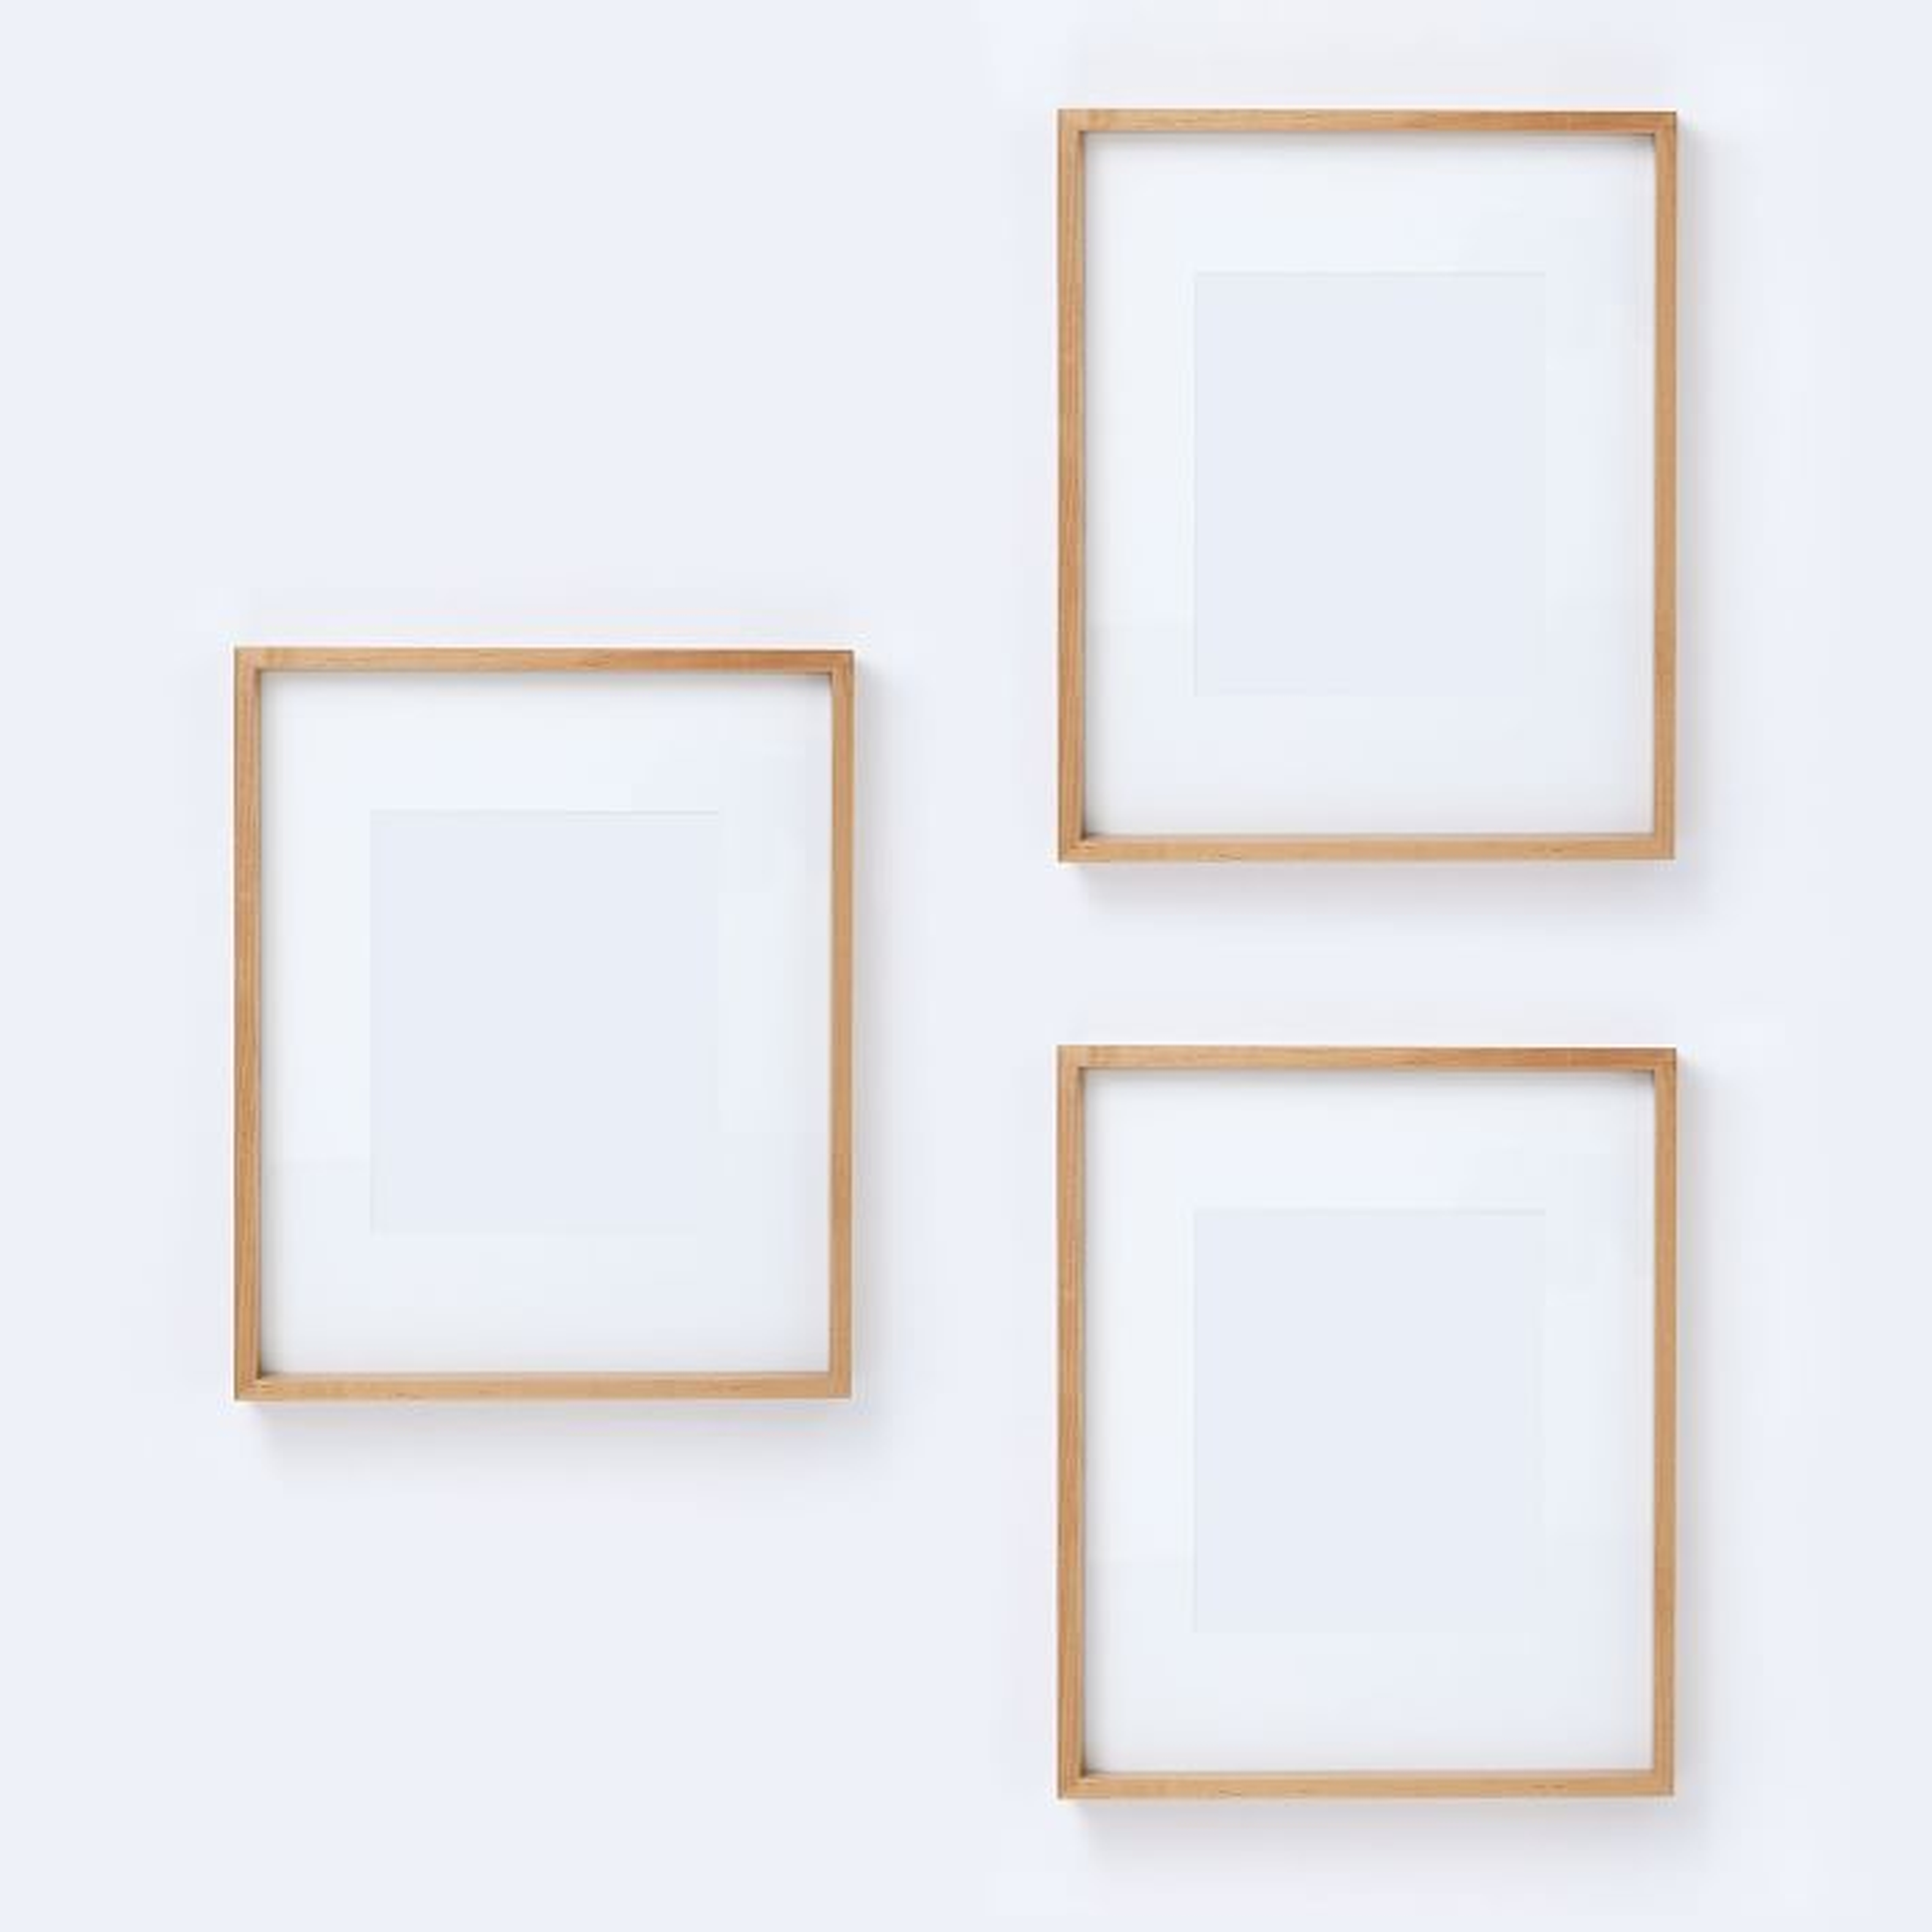 Gallery Frames, Set of 3, 16"x20",Wheat - West Elm